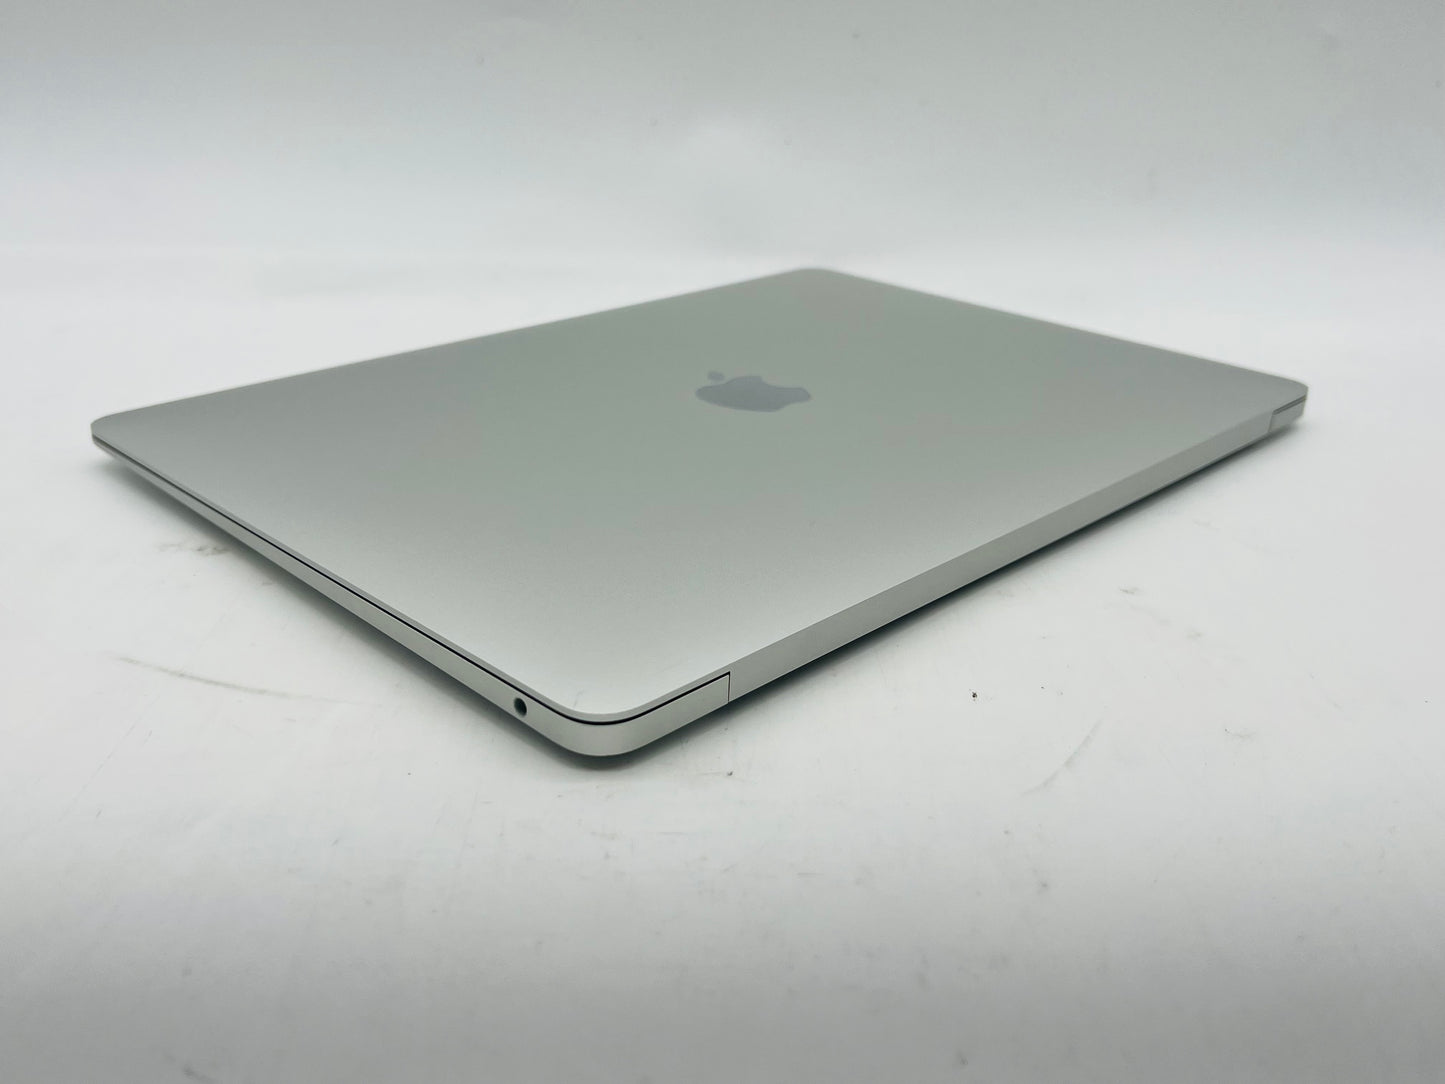 Apple 2019 Macbook Air 13in 1.6GHz i5 8GB RAM 128GB SSD IUG617 - Very Good